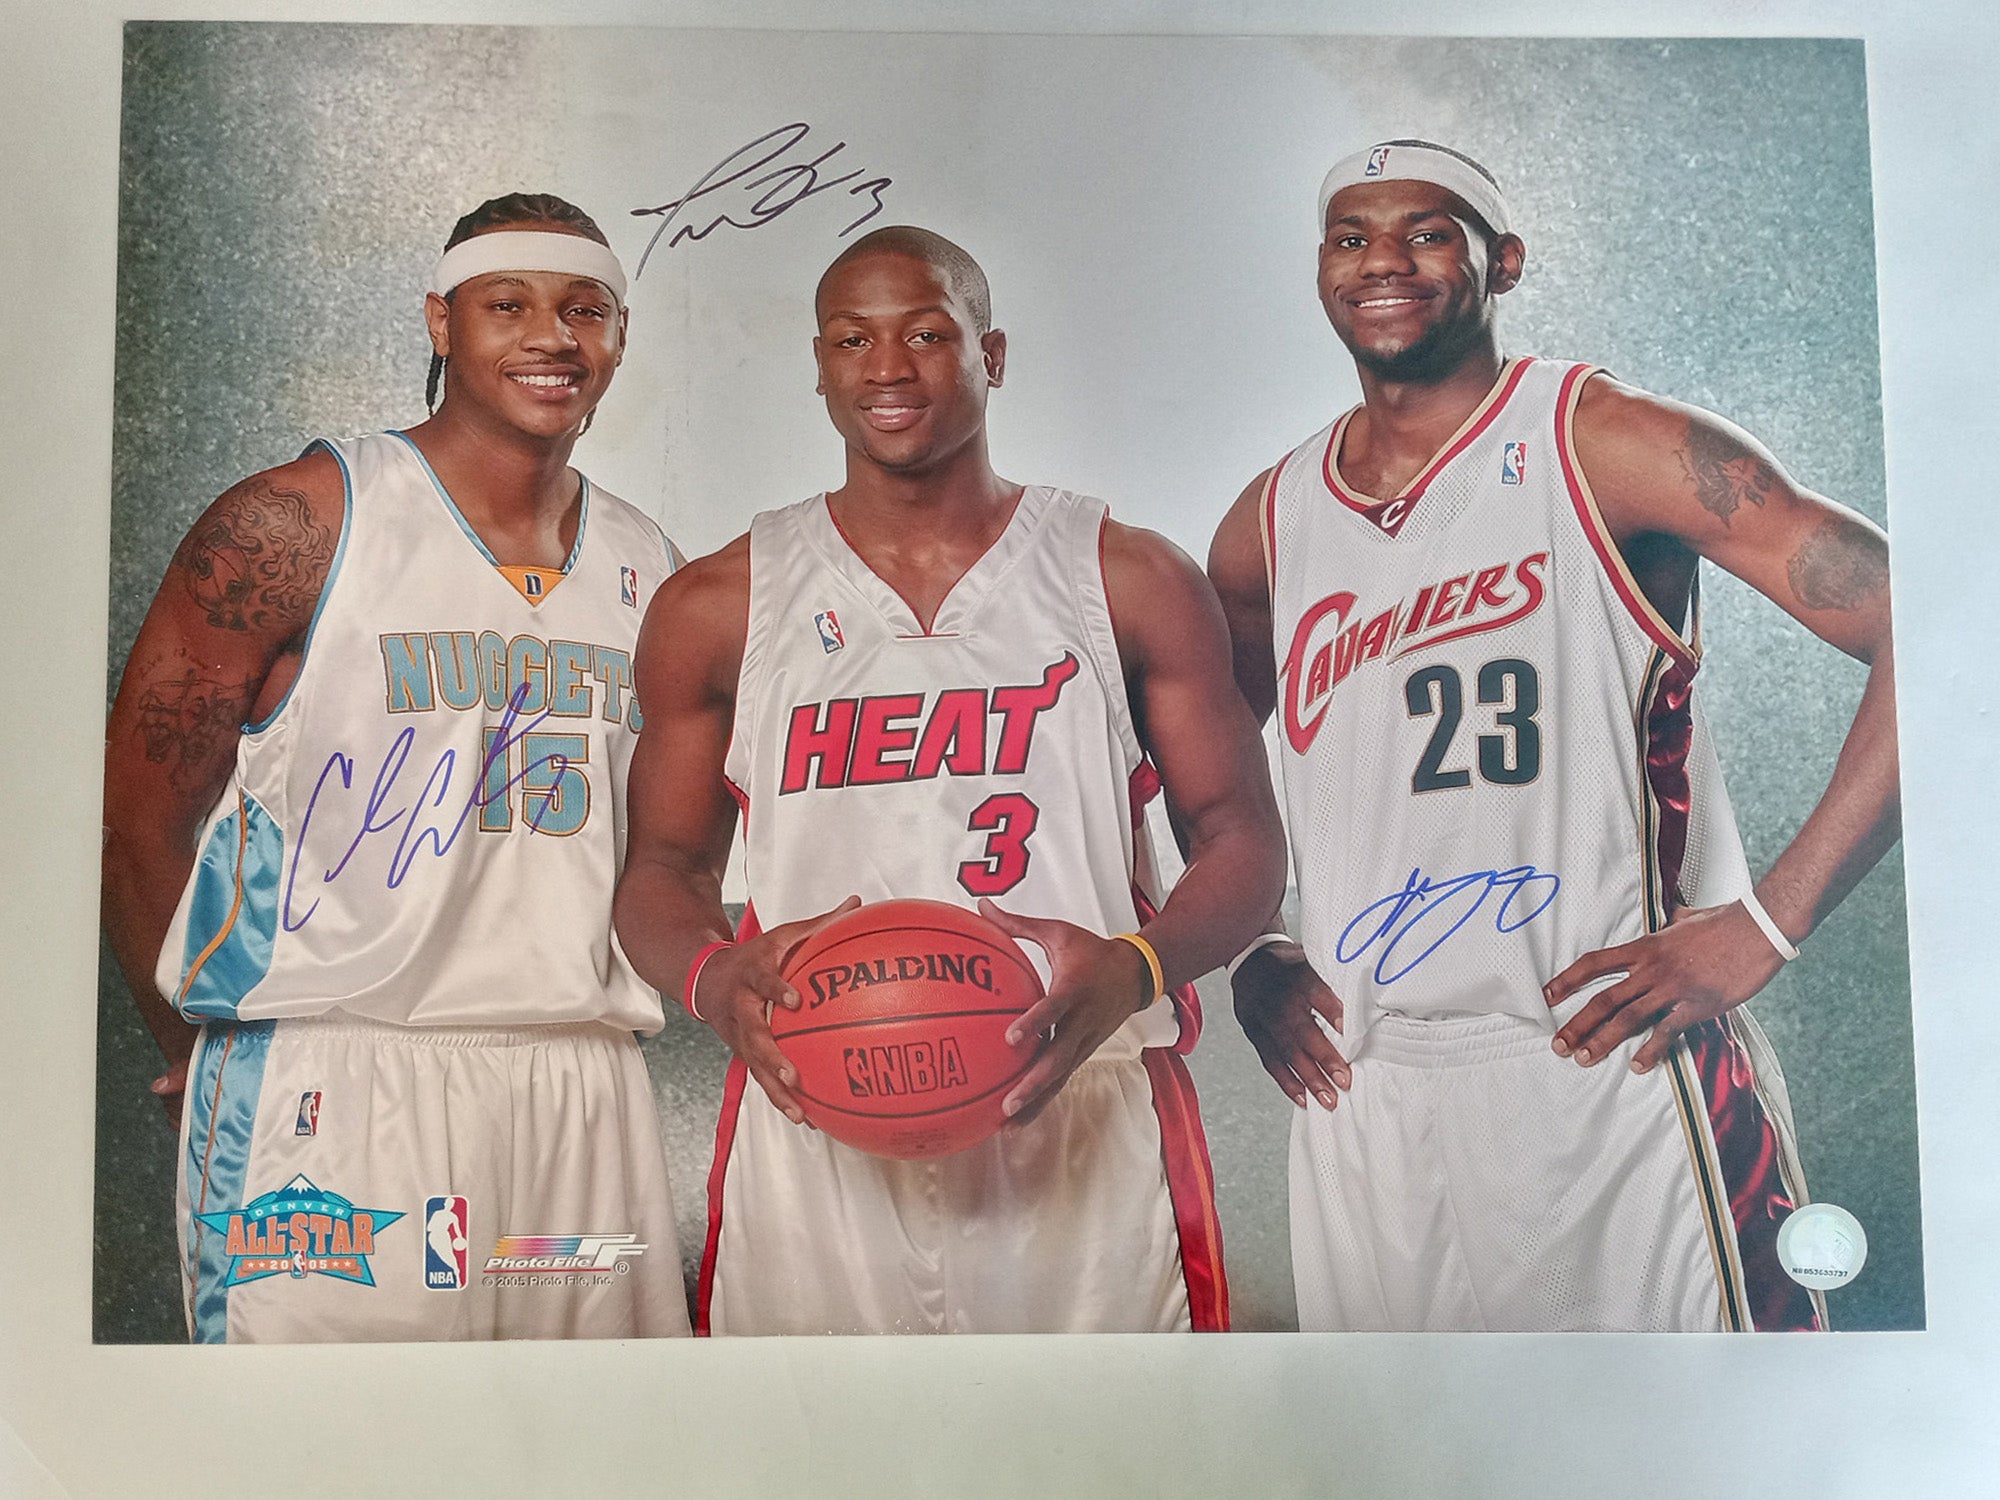 LeBron James, Carmelo Anthony and Dwyane Wade 16x20 photo signed with proof